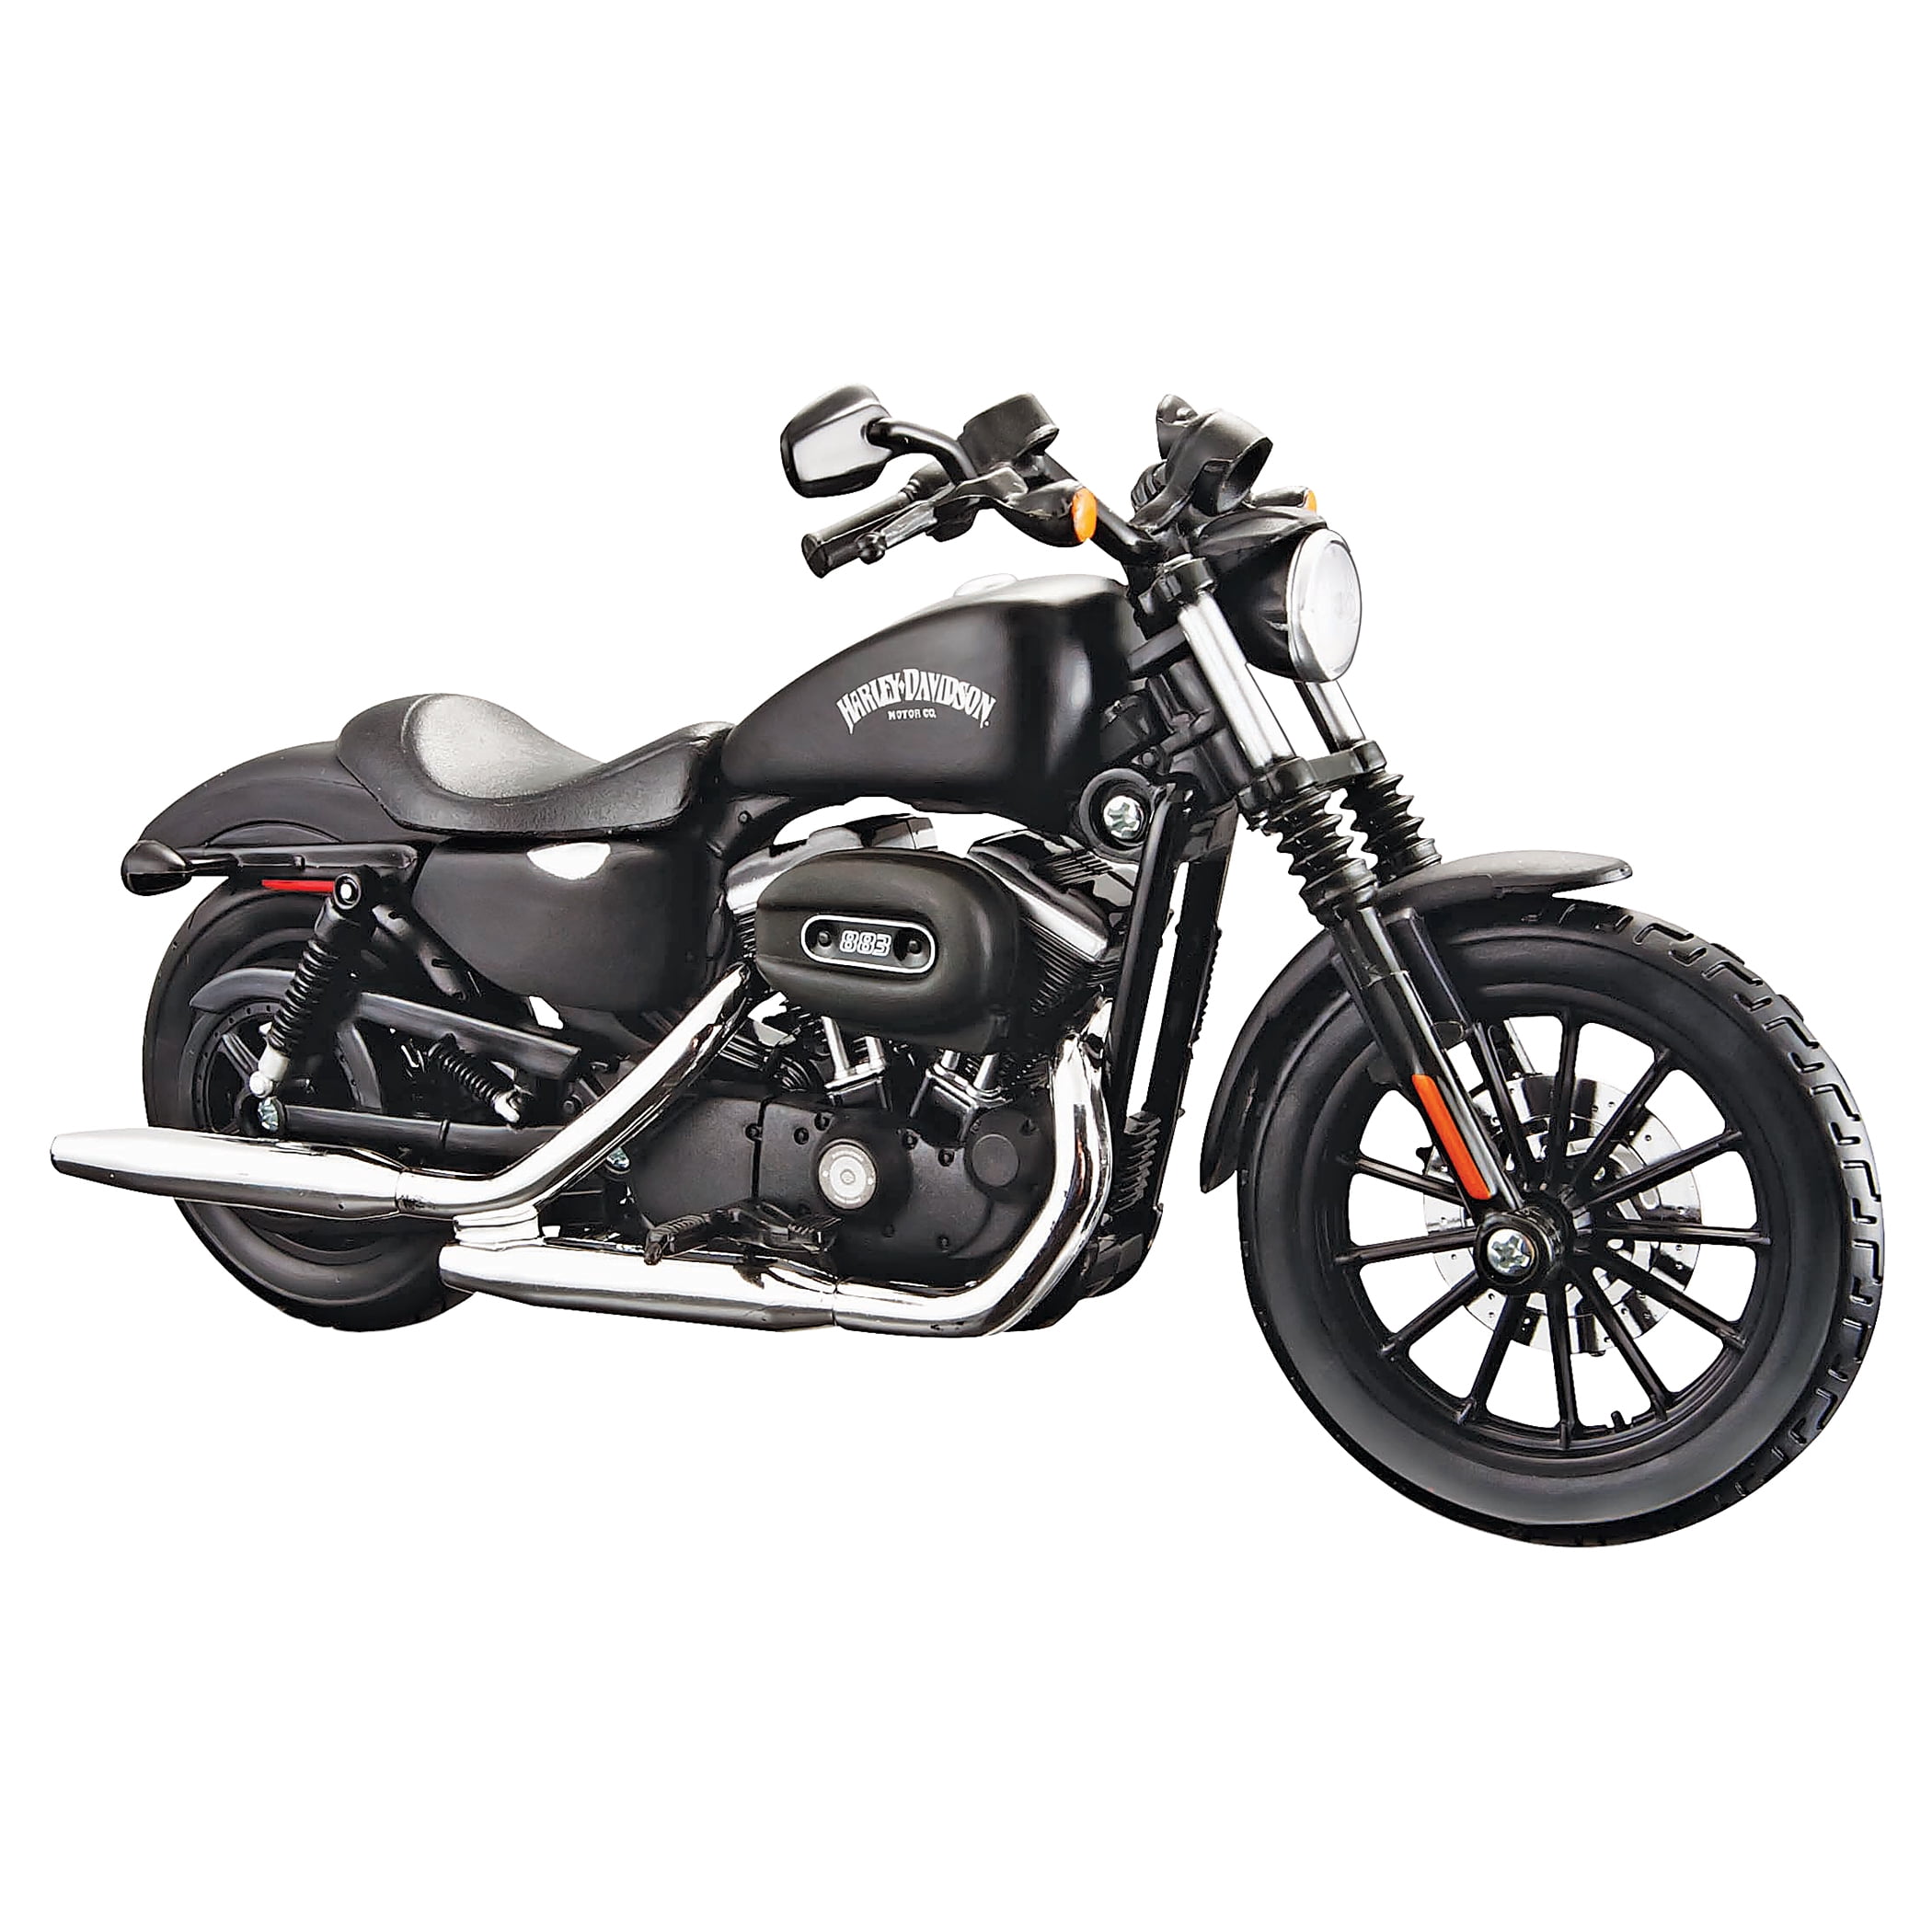 Harley-Davidson 2015 Street Glide Special negro escala 1:12 de maisto 